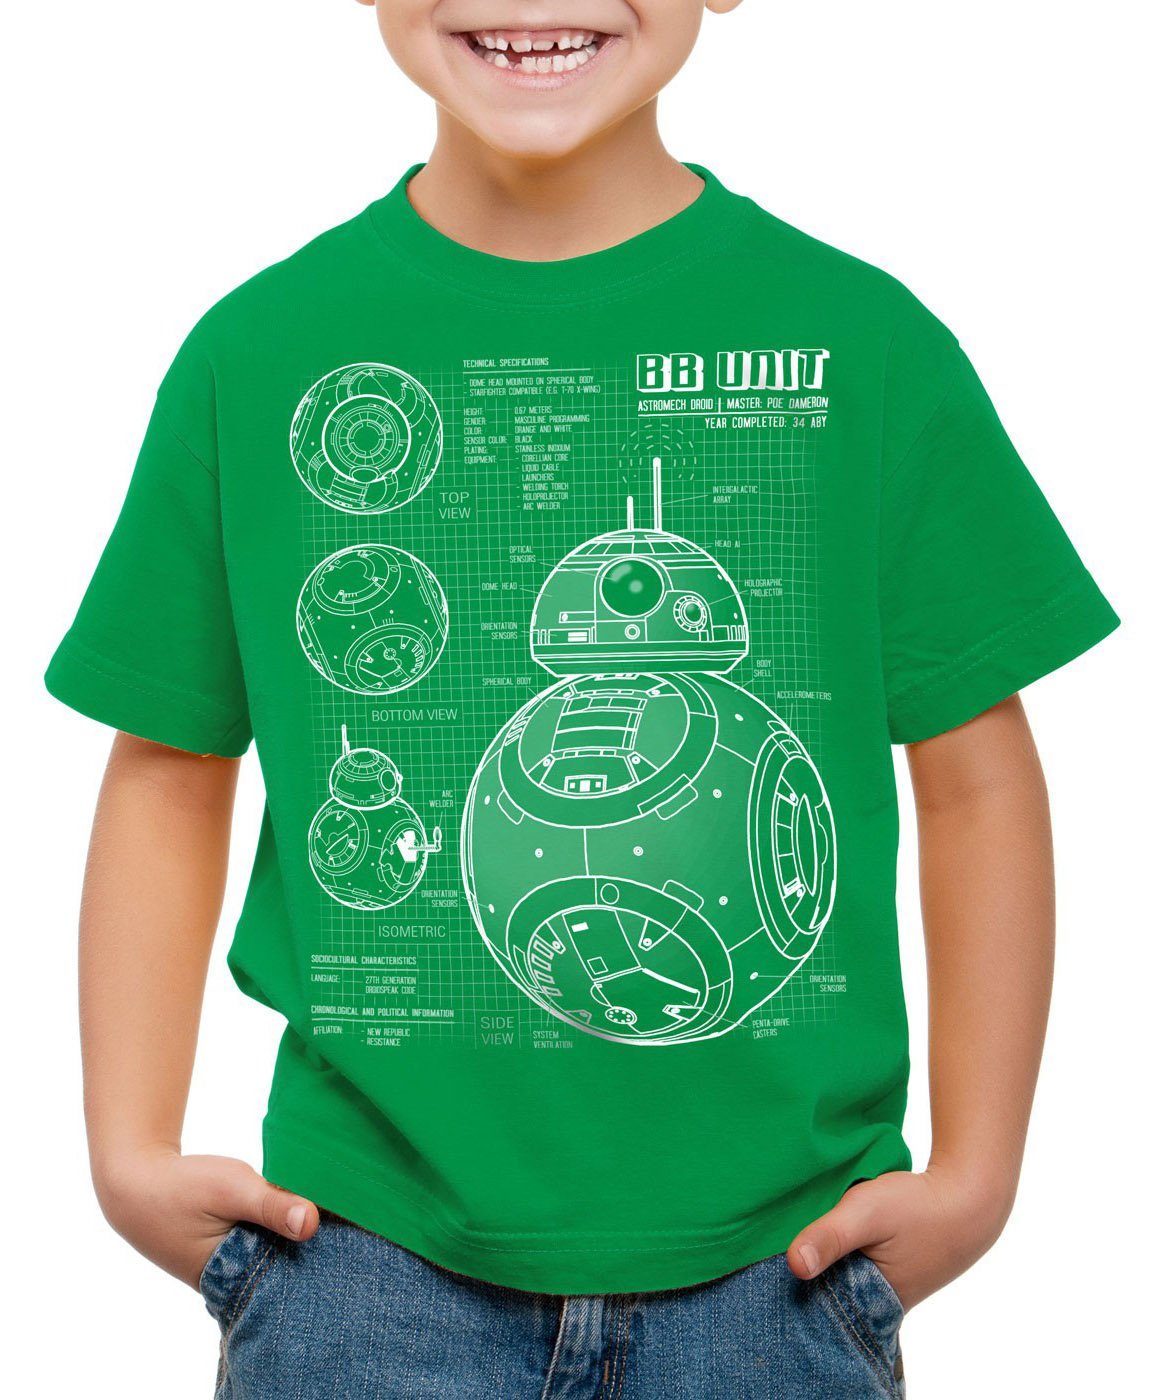 style3 Print-Shirt Kinder T-Shirt BB Unit blaupause astromech droide grün